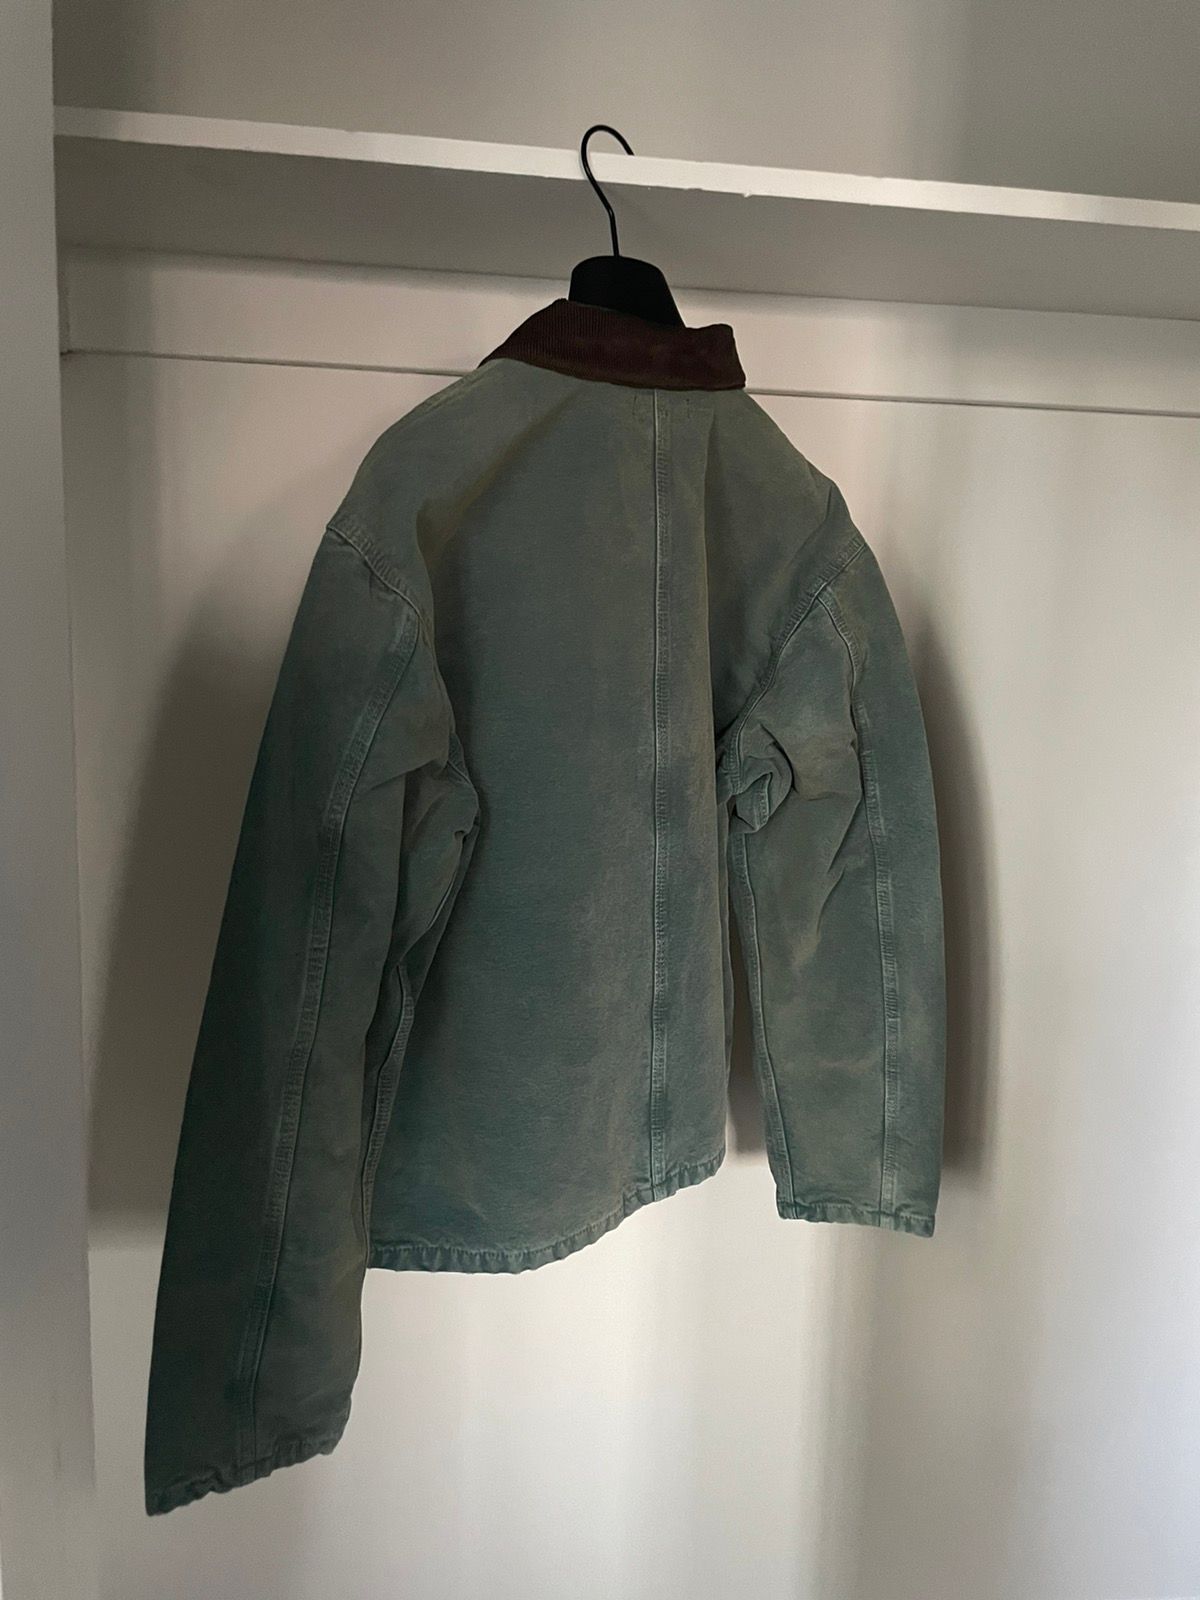 Yeezy Season Yeezy Season 6 Flannel Lined Denim Jacket Glacier Size US S / EU 44-46 / 1 - 4 Thumbnail